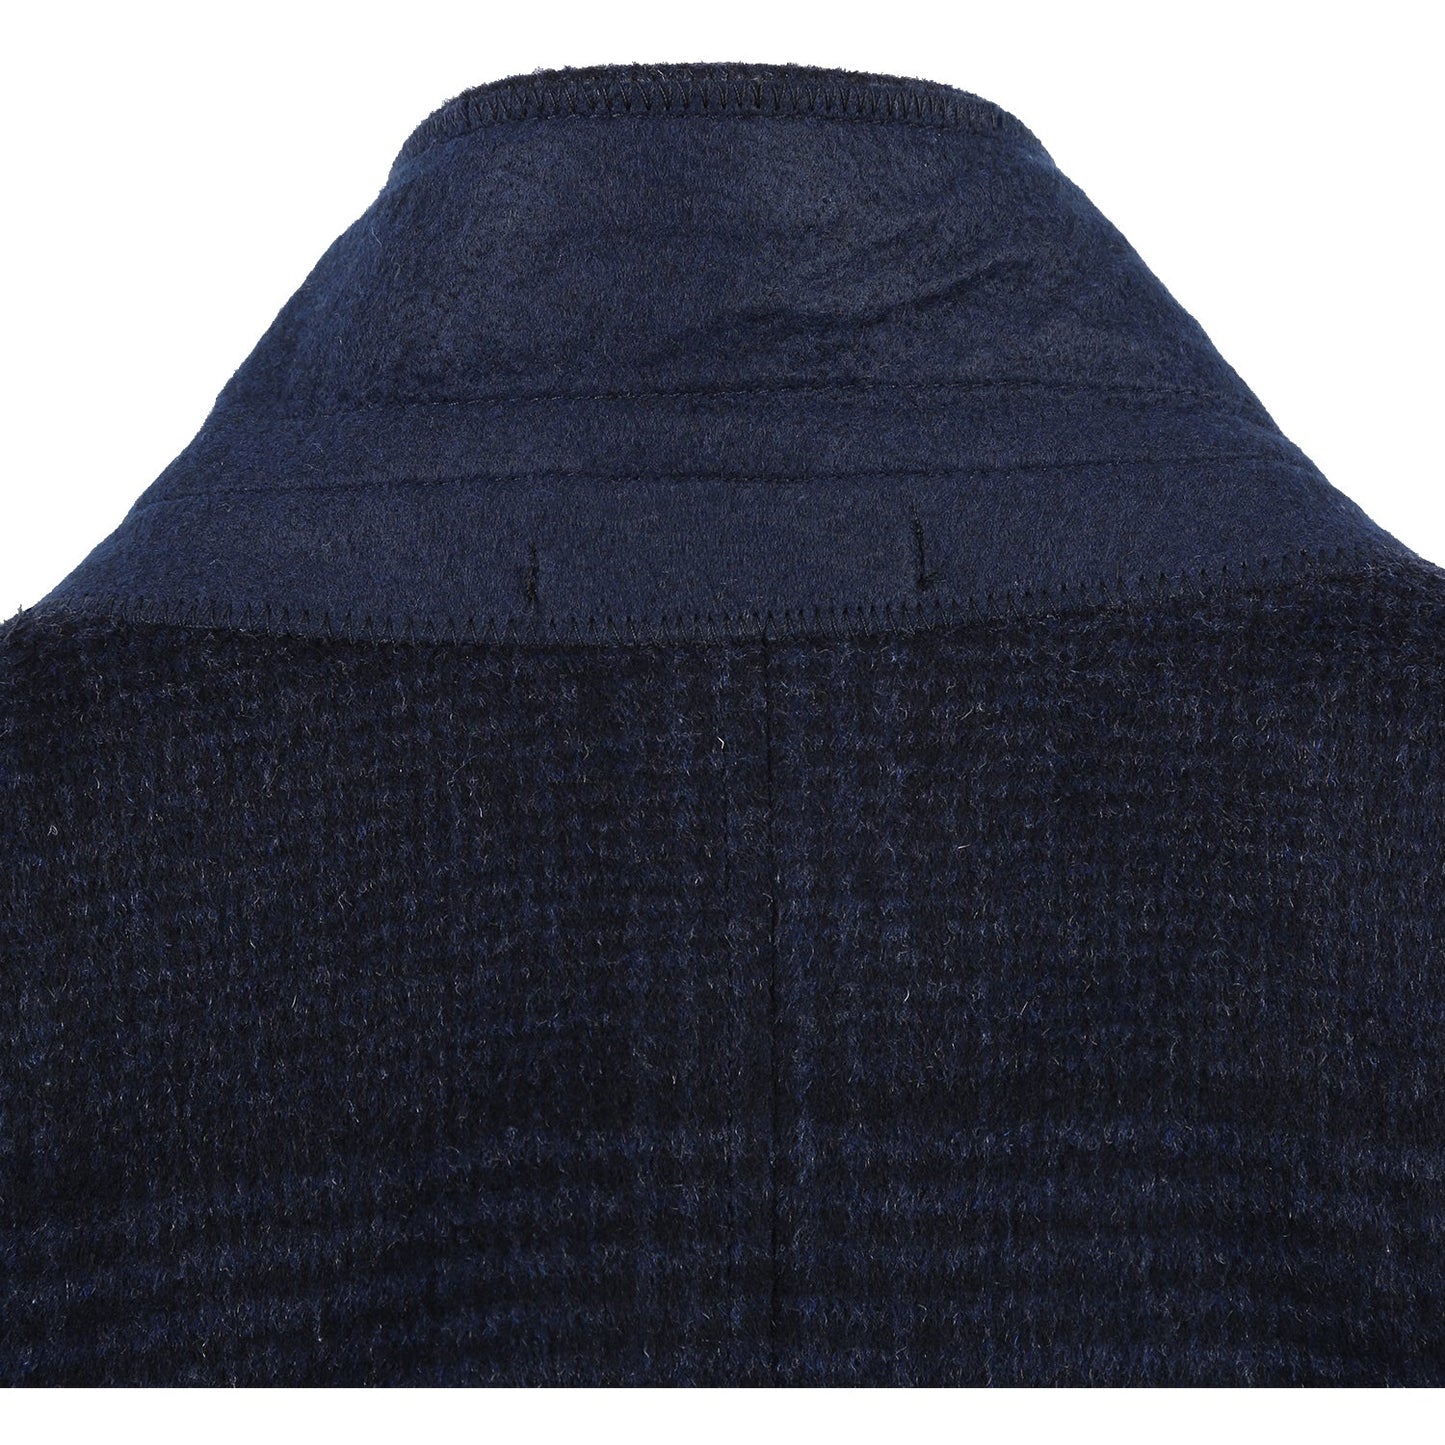 53-55-495 Wool Blend Breasted Gray Blue Top Coat BIB